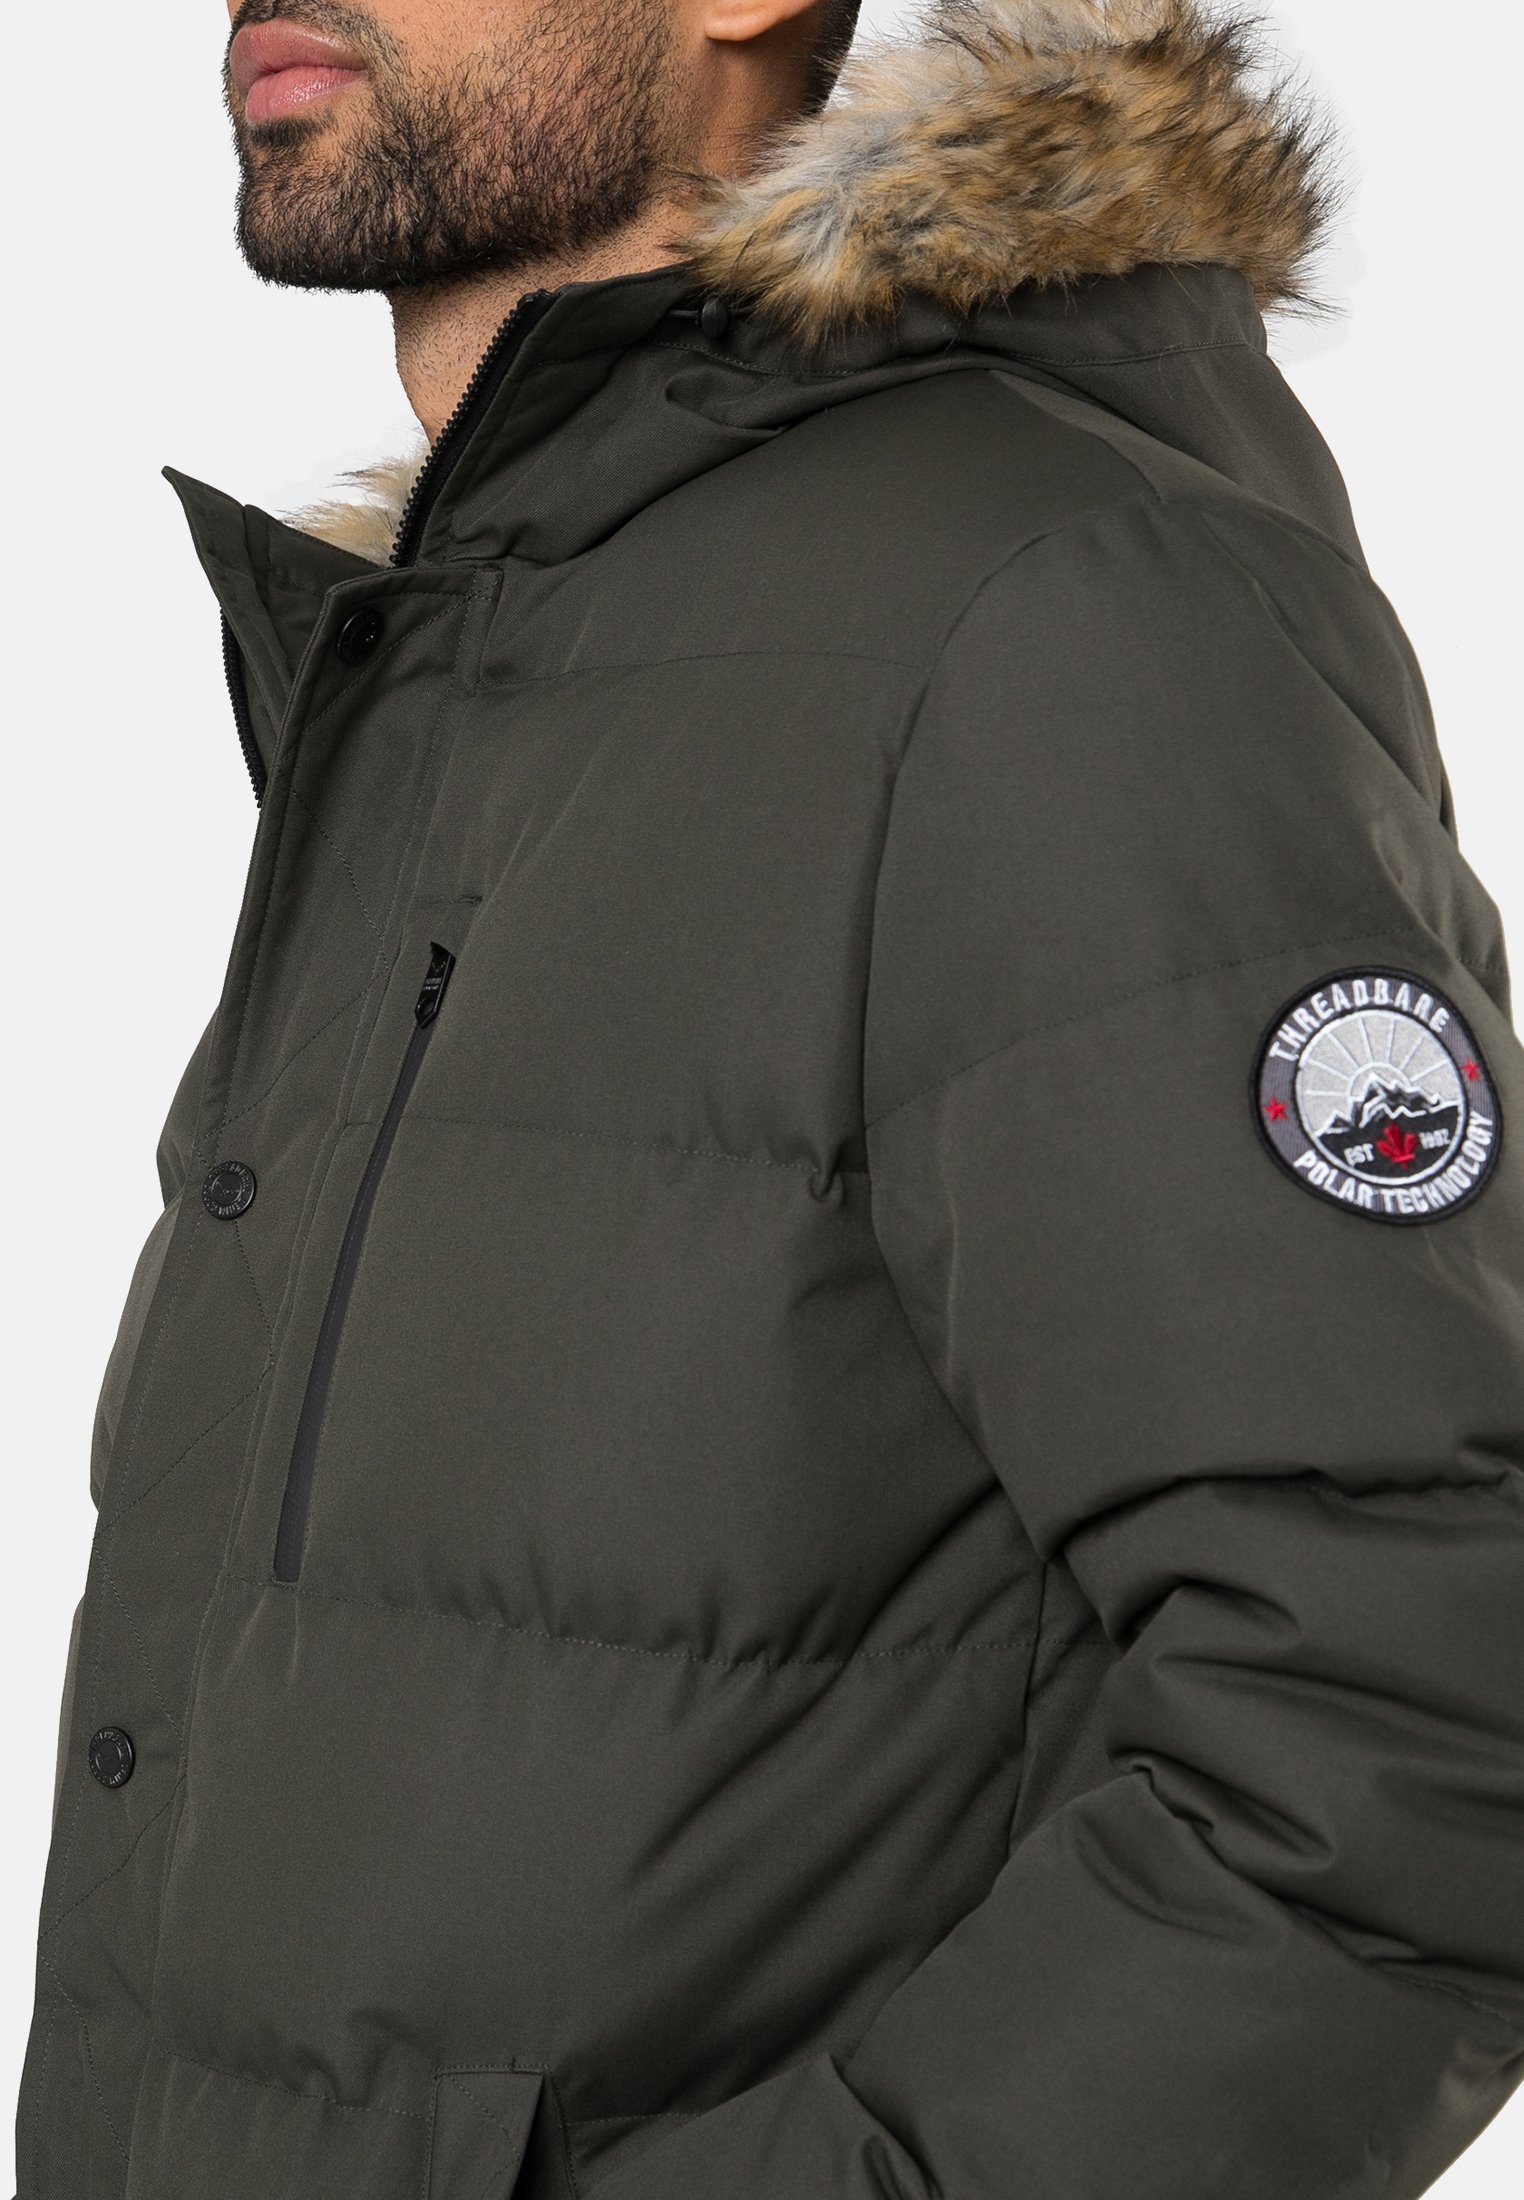 Threadbare Winterjacke THB Jacket olivgrün Khaki- Standard (GRS) zertifiziert Recycled Padded Arnwood Global